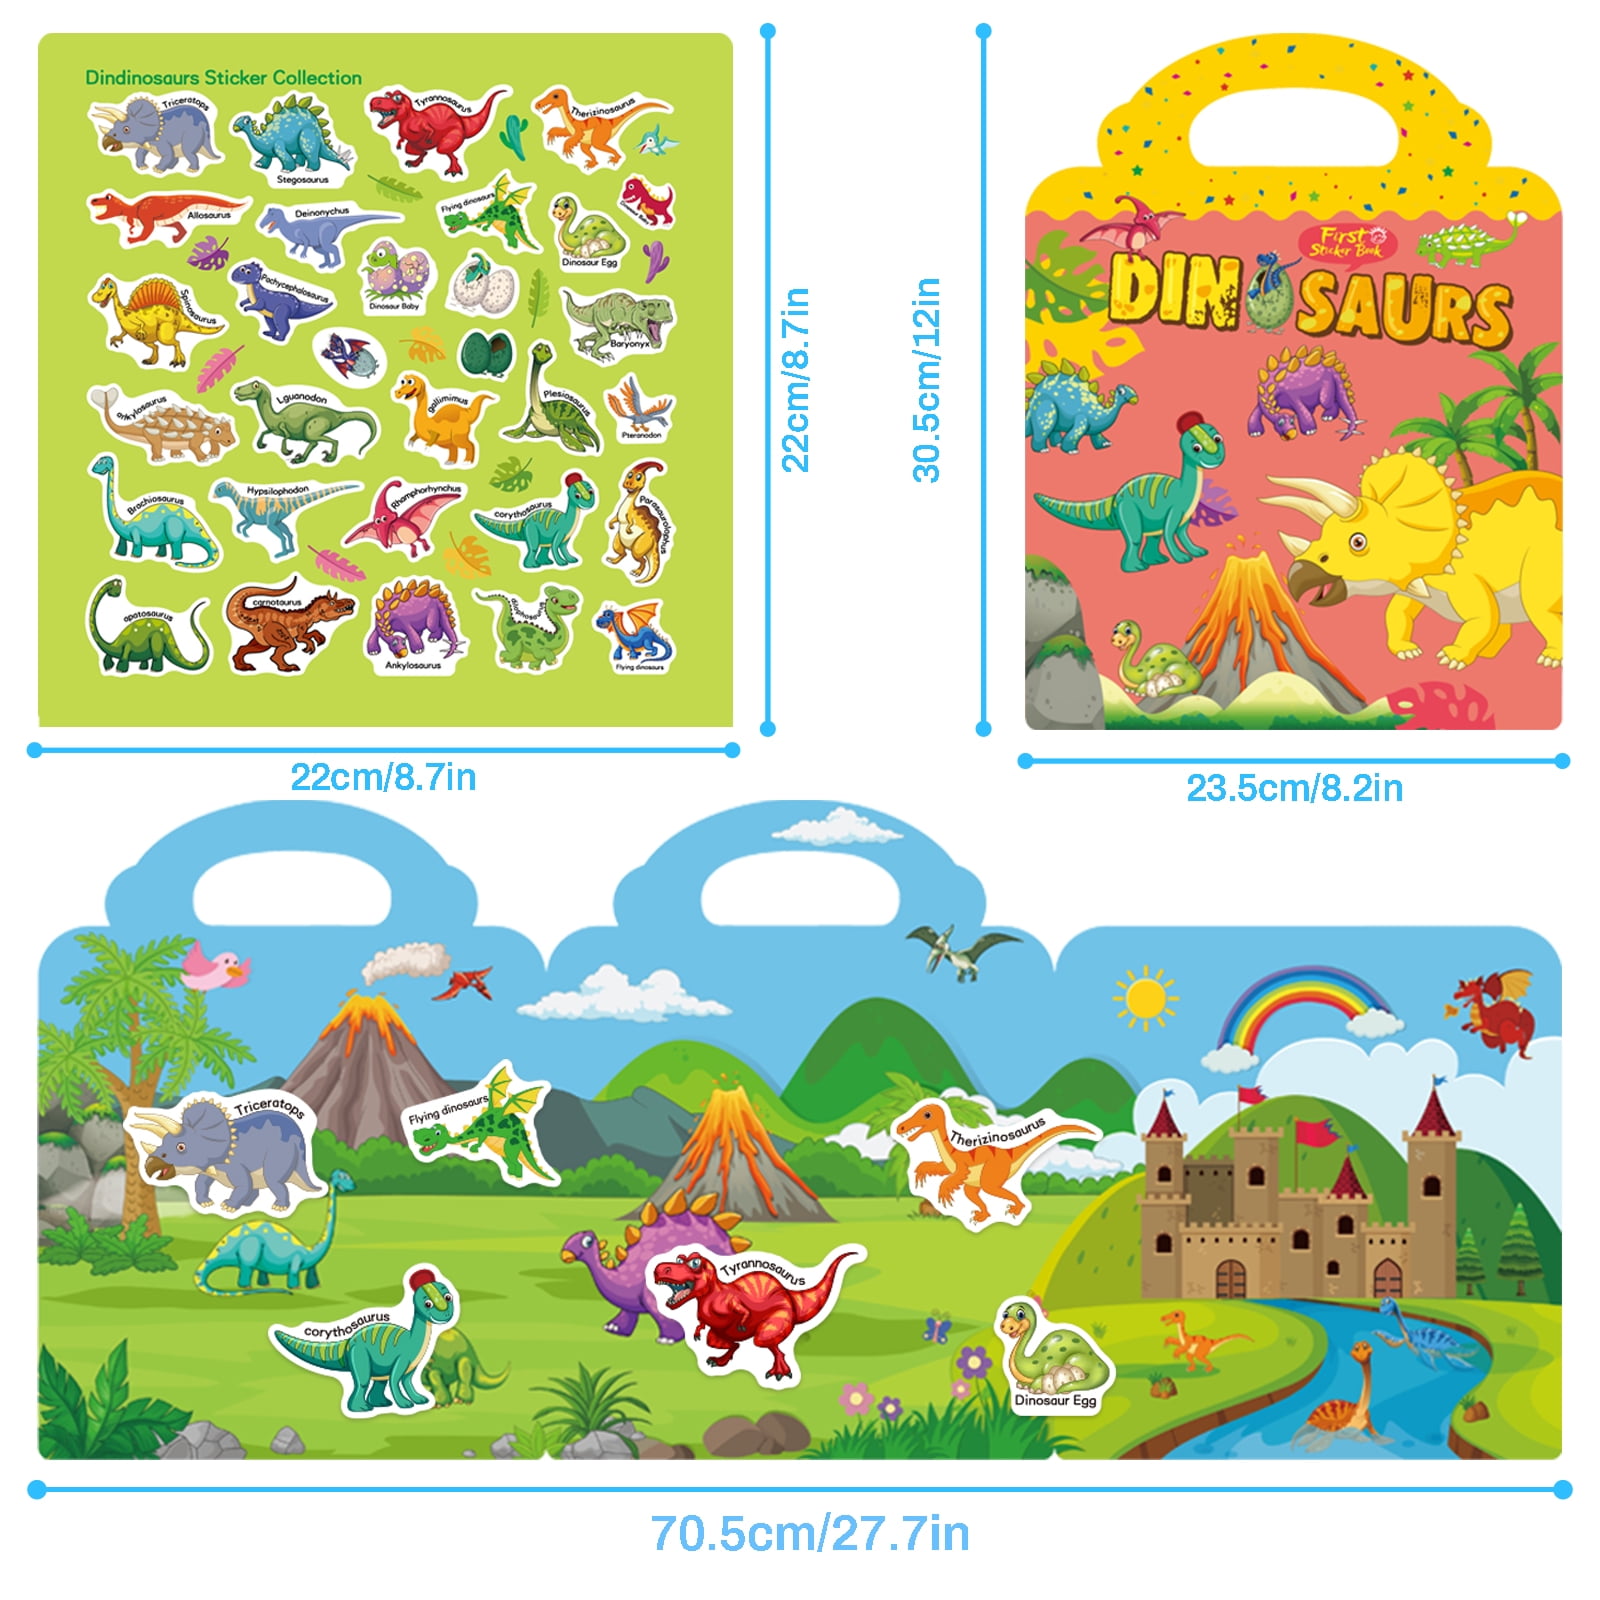 My Sticker Book: Kids Dinosaur Blank Sticker Album for Collecting Stickers  - Story Books, Blank: 9781660343508 - AbeBooks